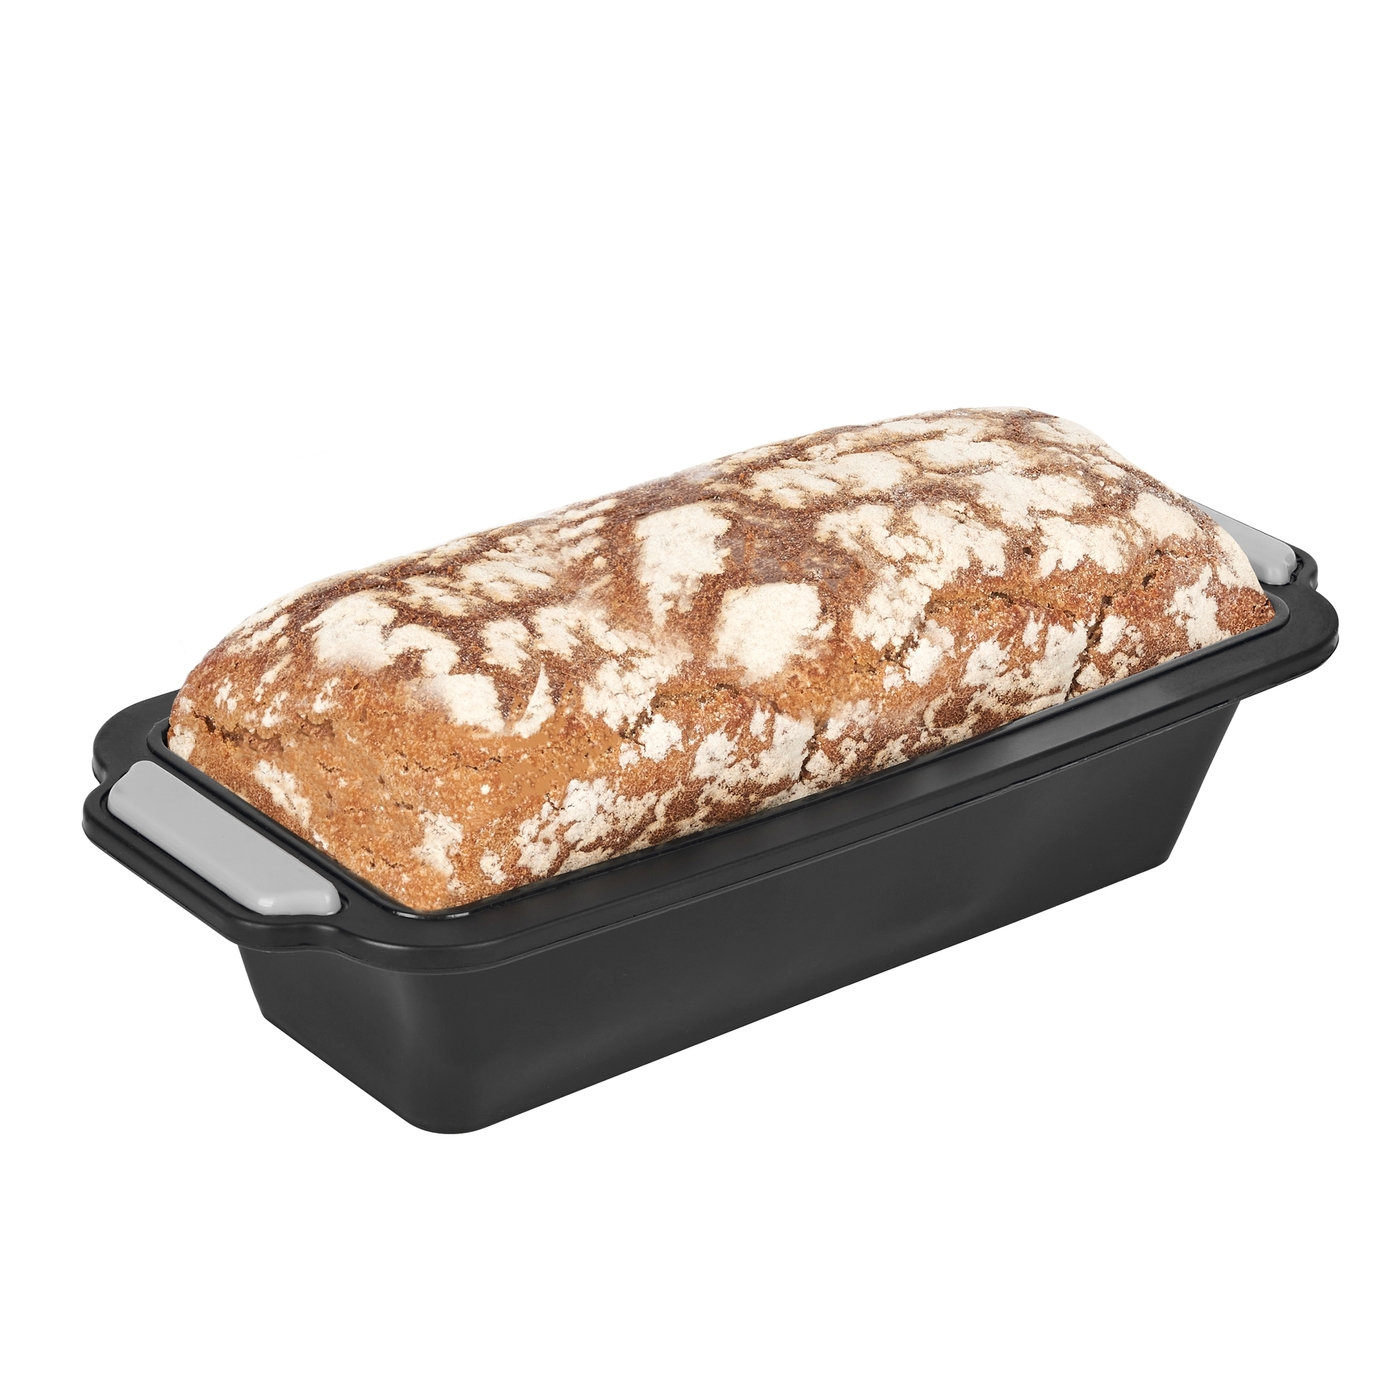 PROPER forma na pečenie chleba SILIKO 